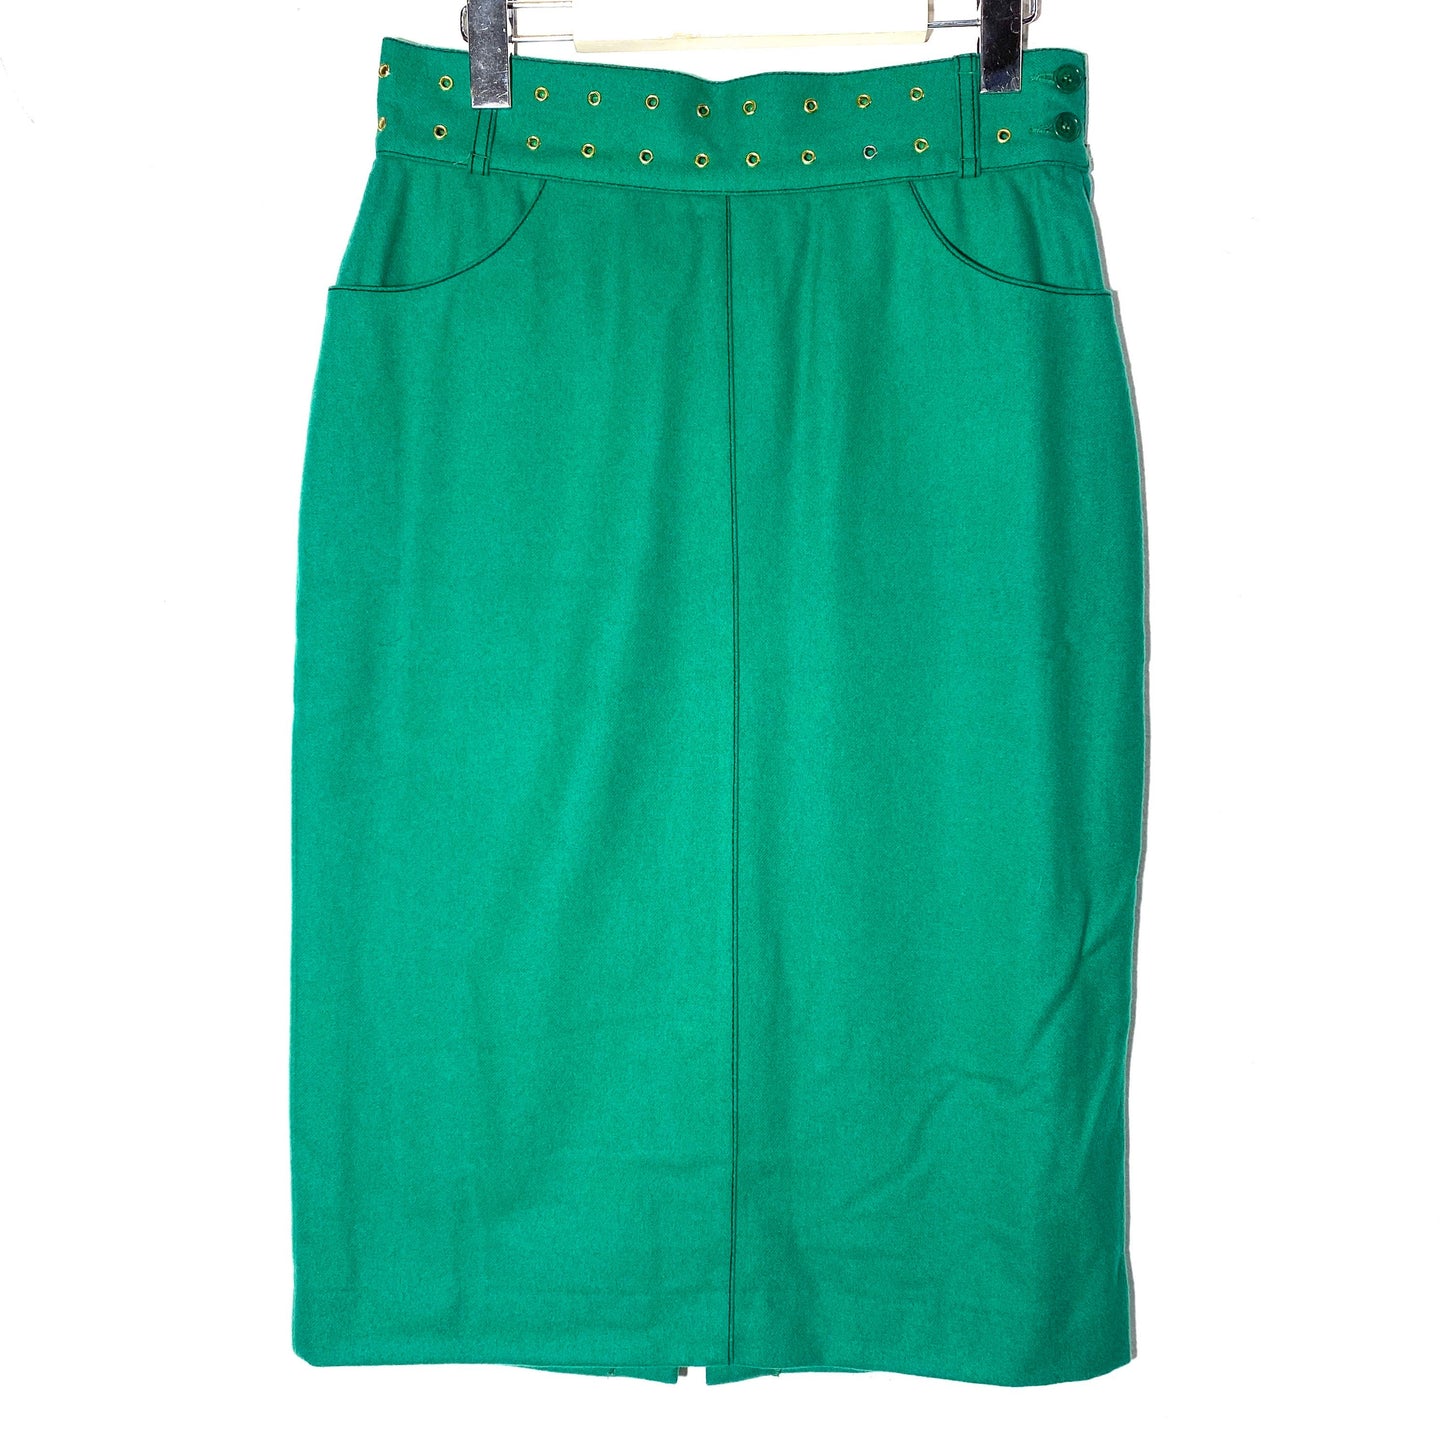 Ferrè Oaks vintage green wool skirt with golden cutoff studs and rocking zipper pocket, 90s NOS